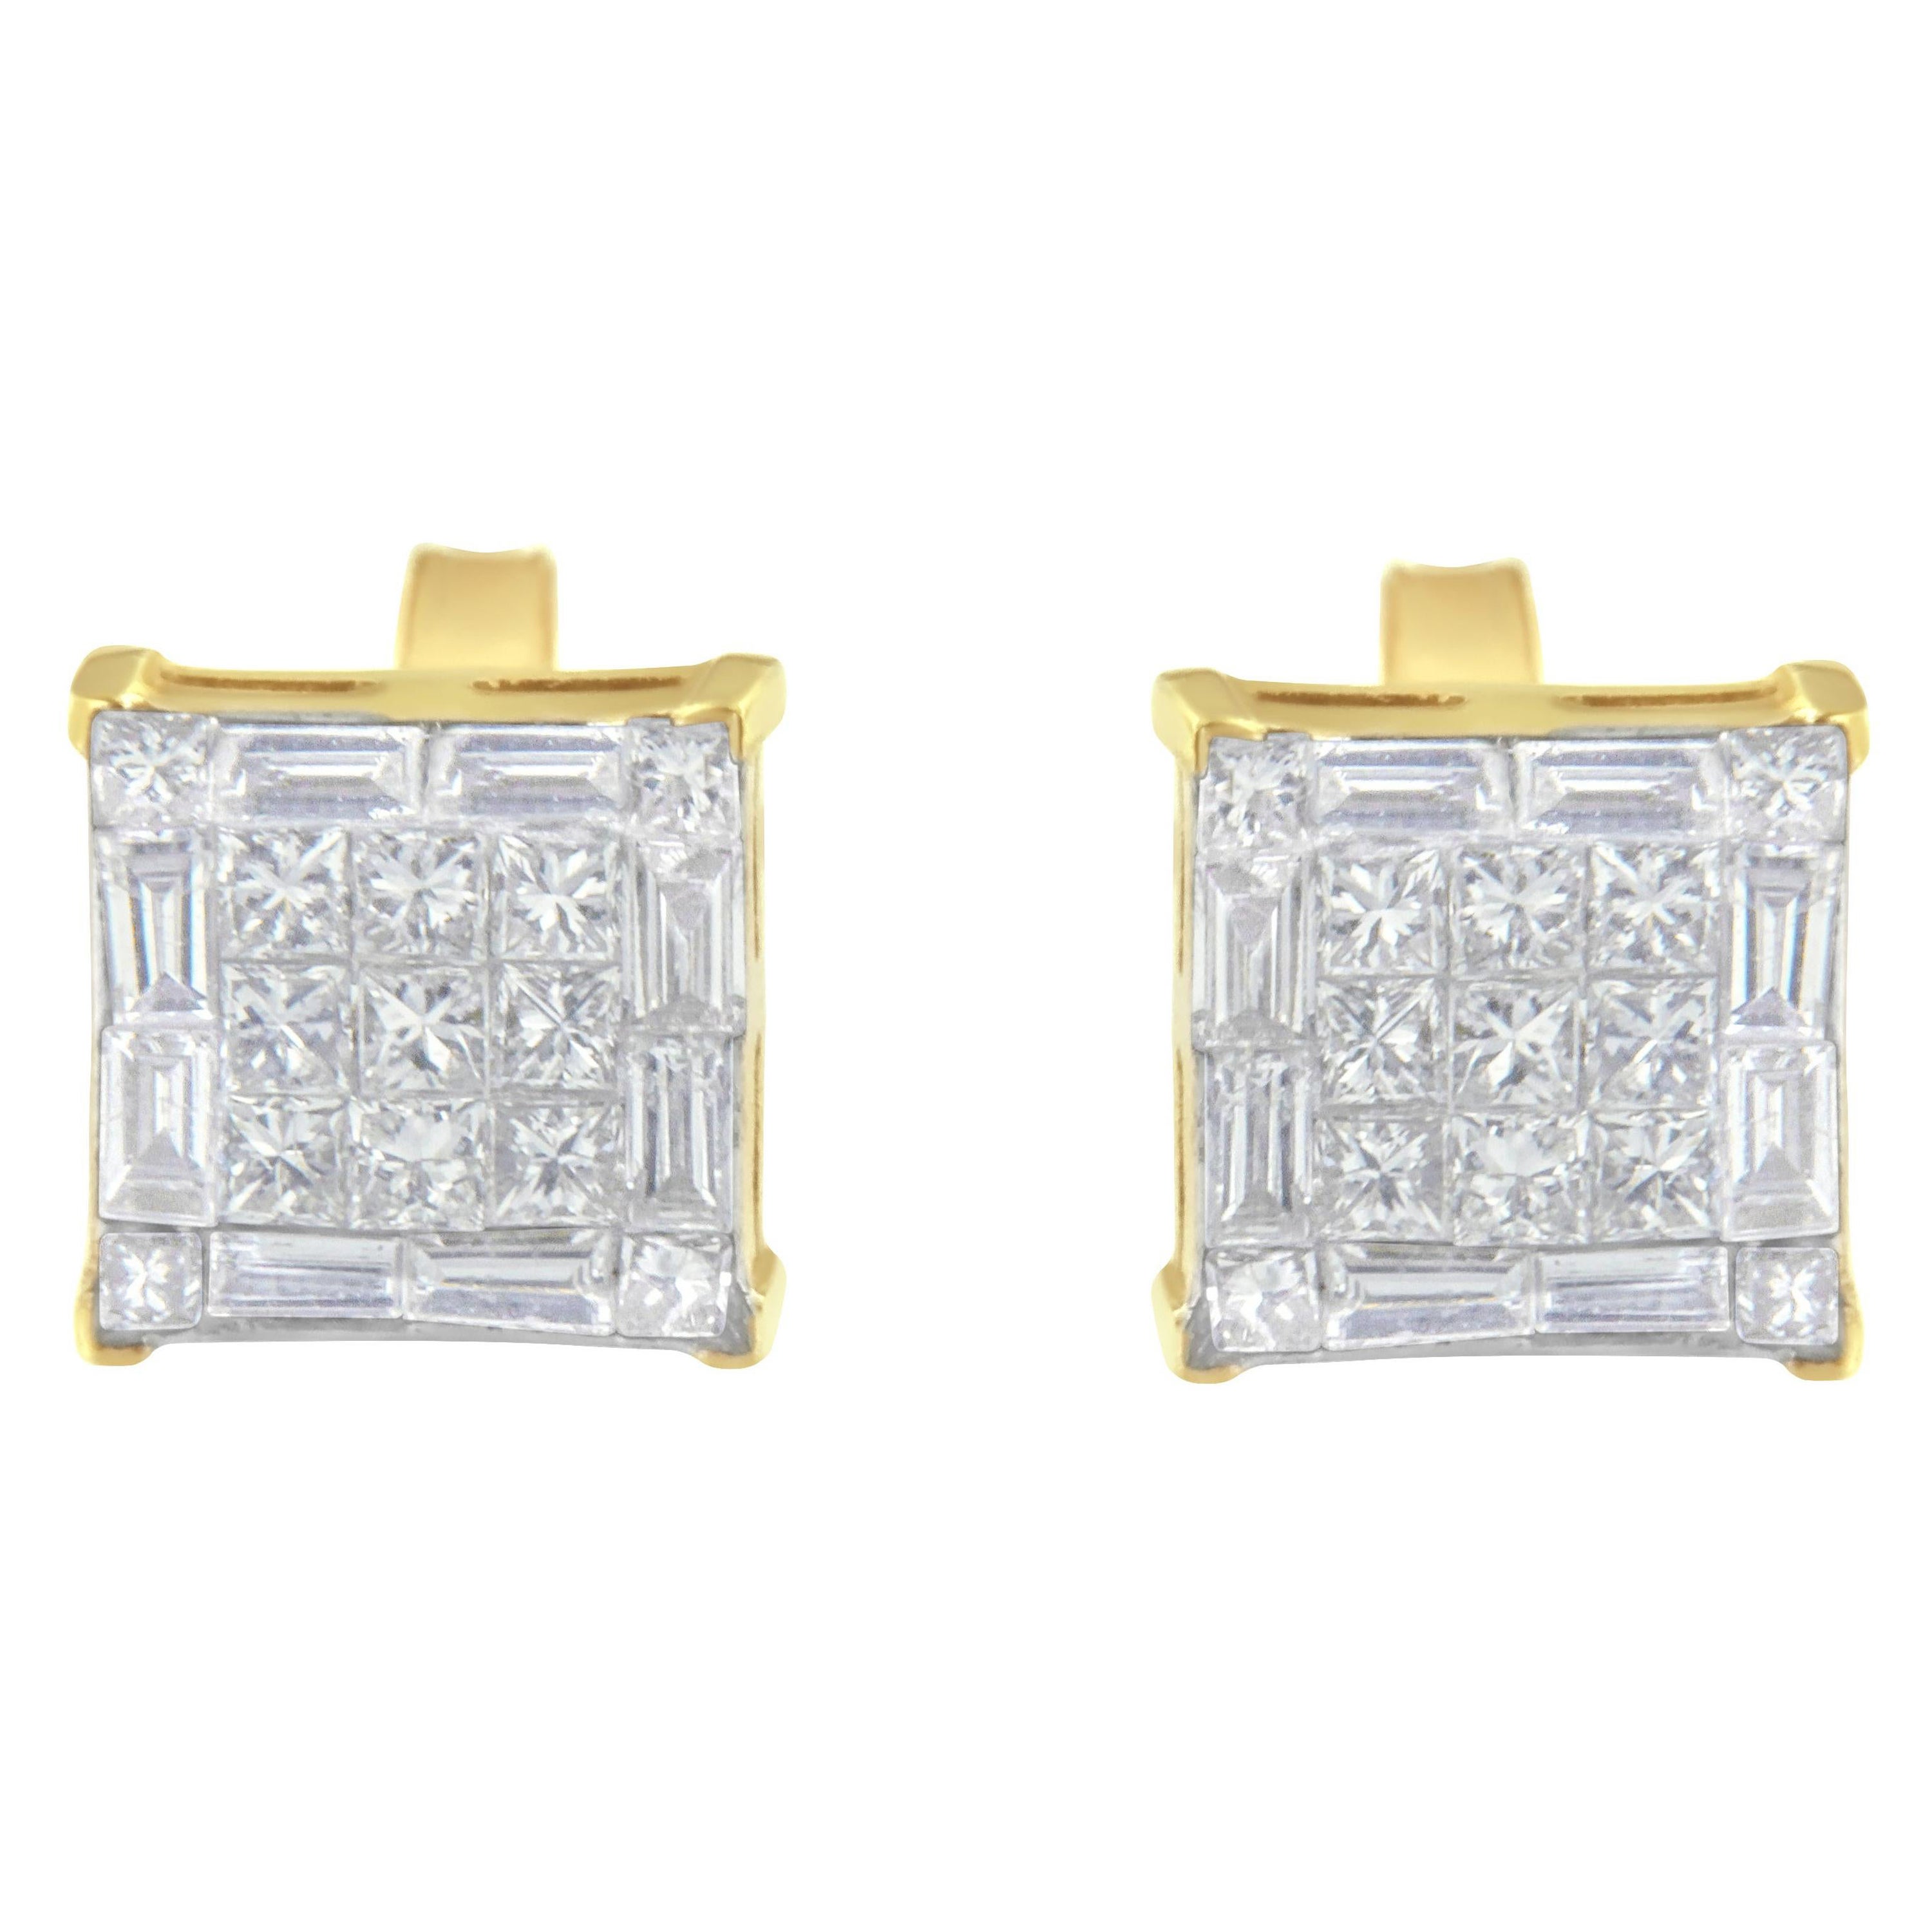 10K Yellow Gold 1.0 Carat Princess Cut Diamond Stud Earrings For Sale